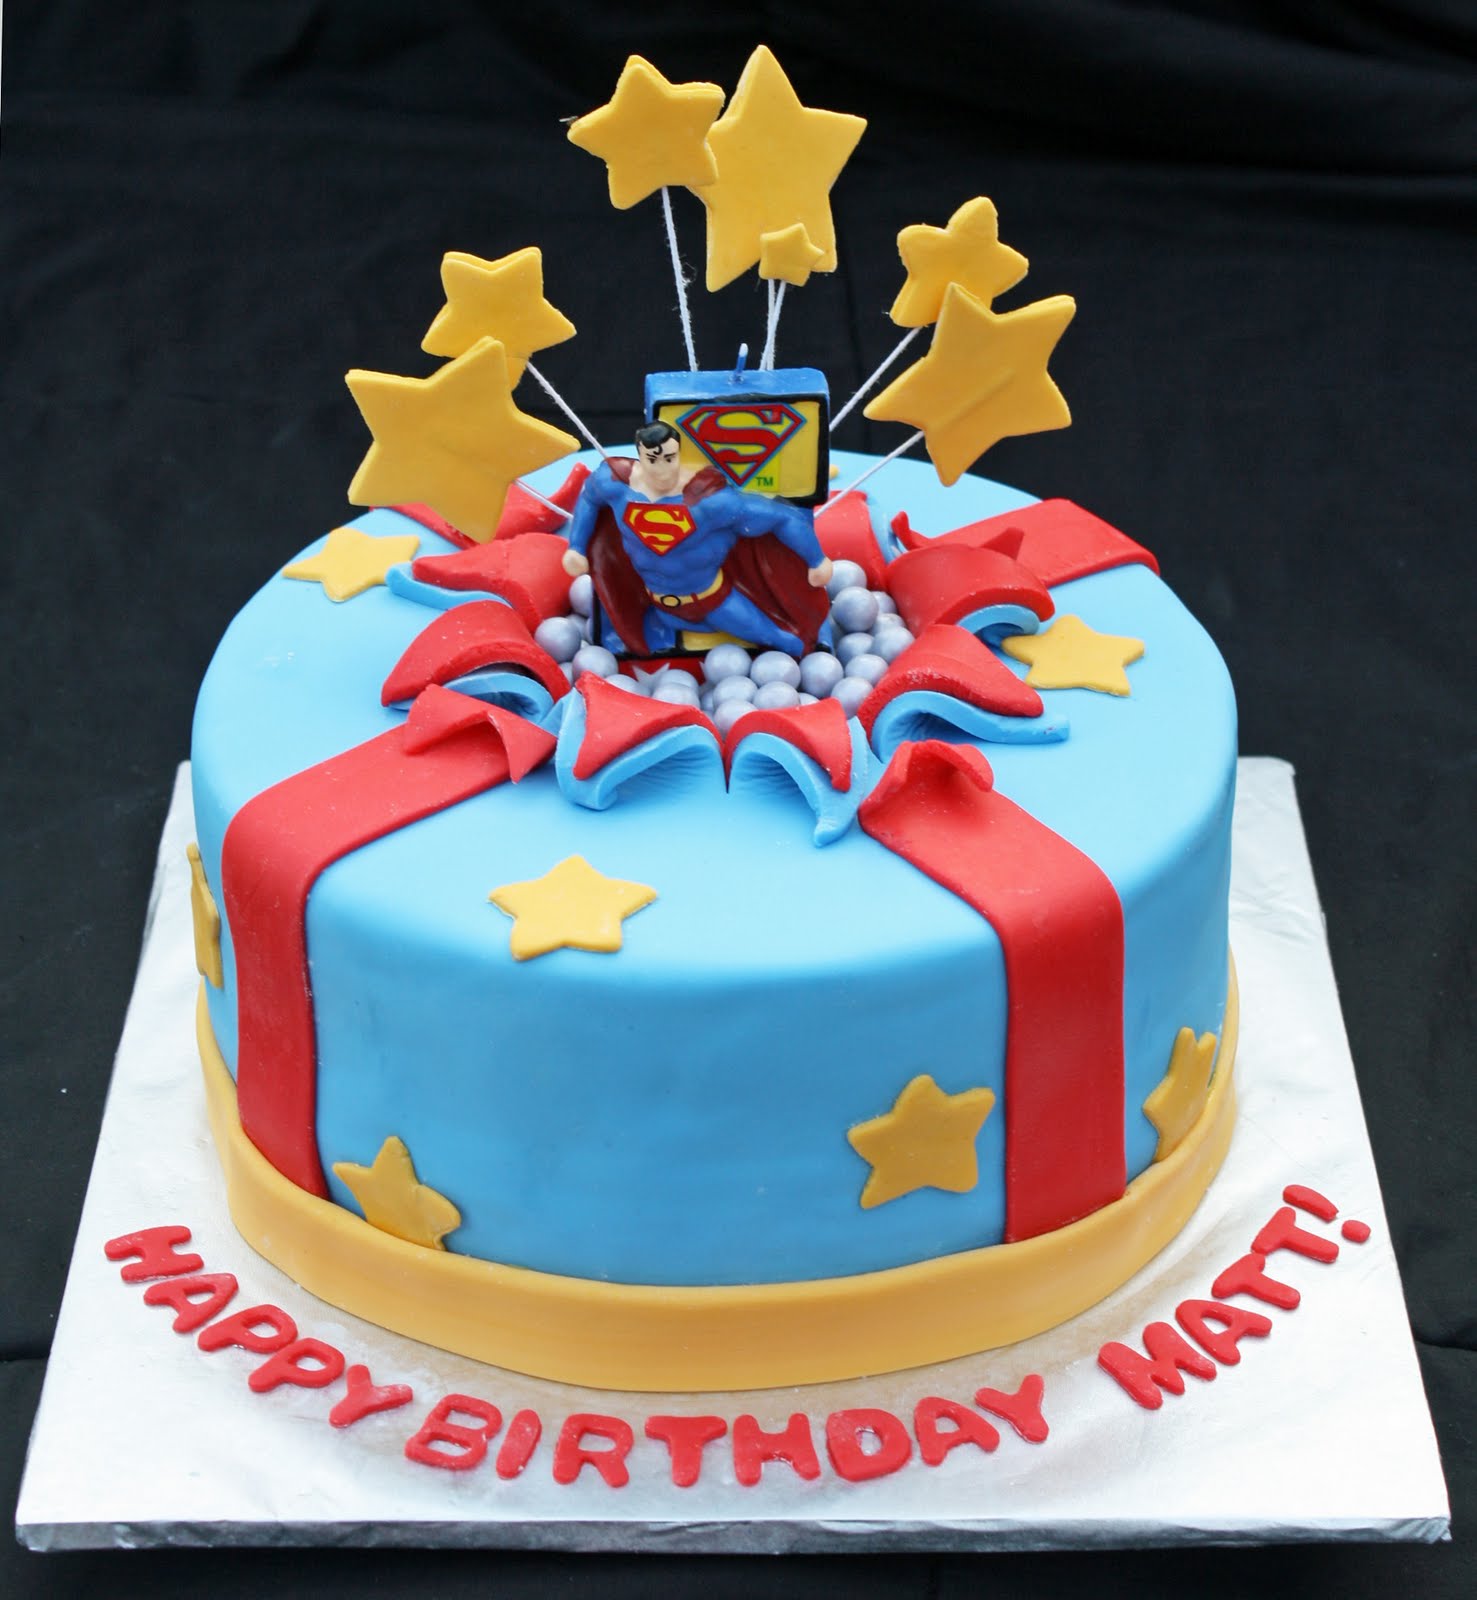 Superman decorated cake